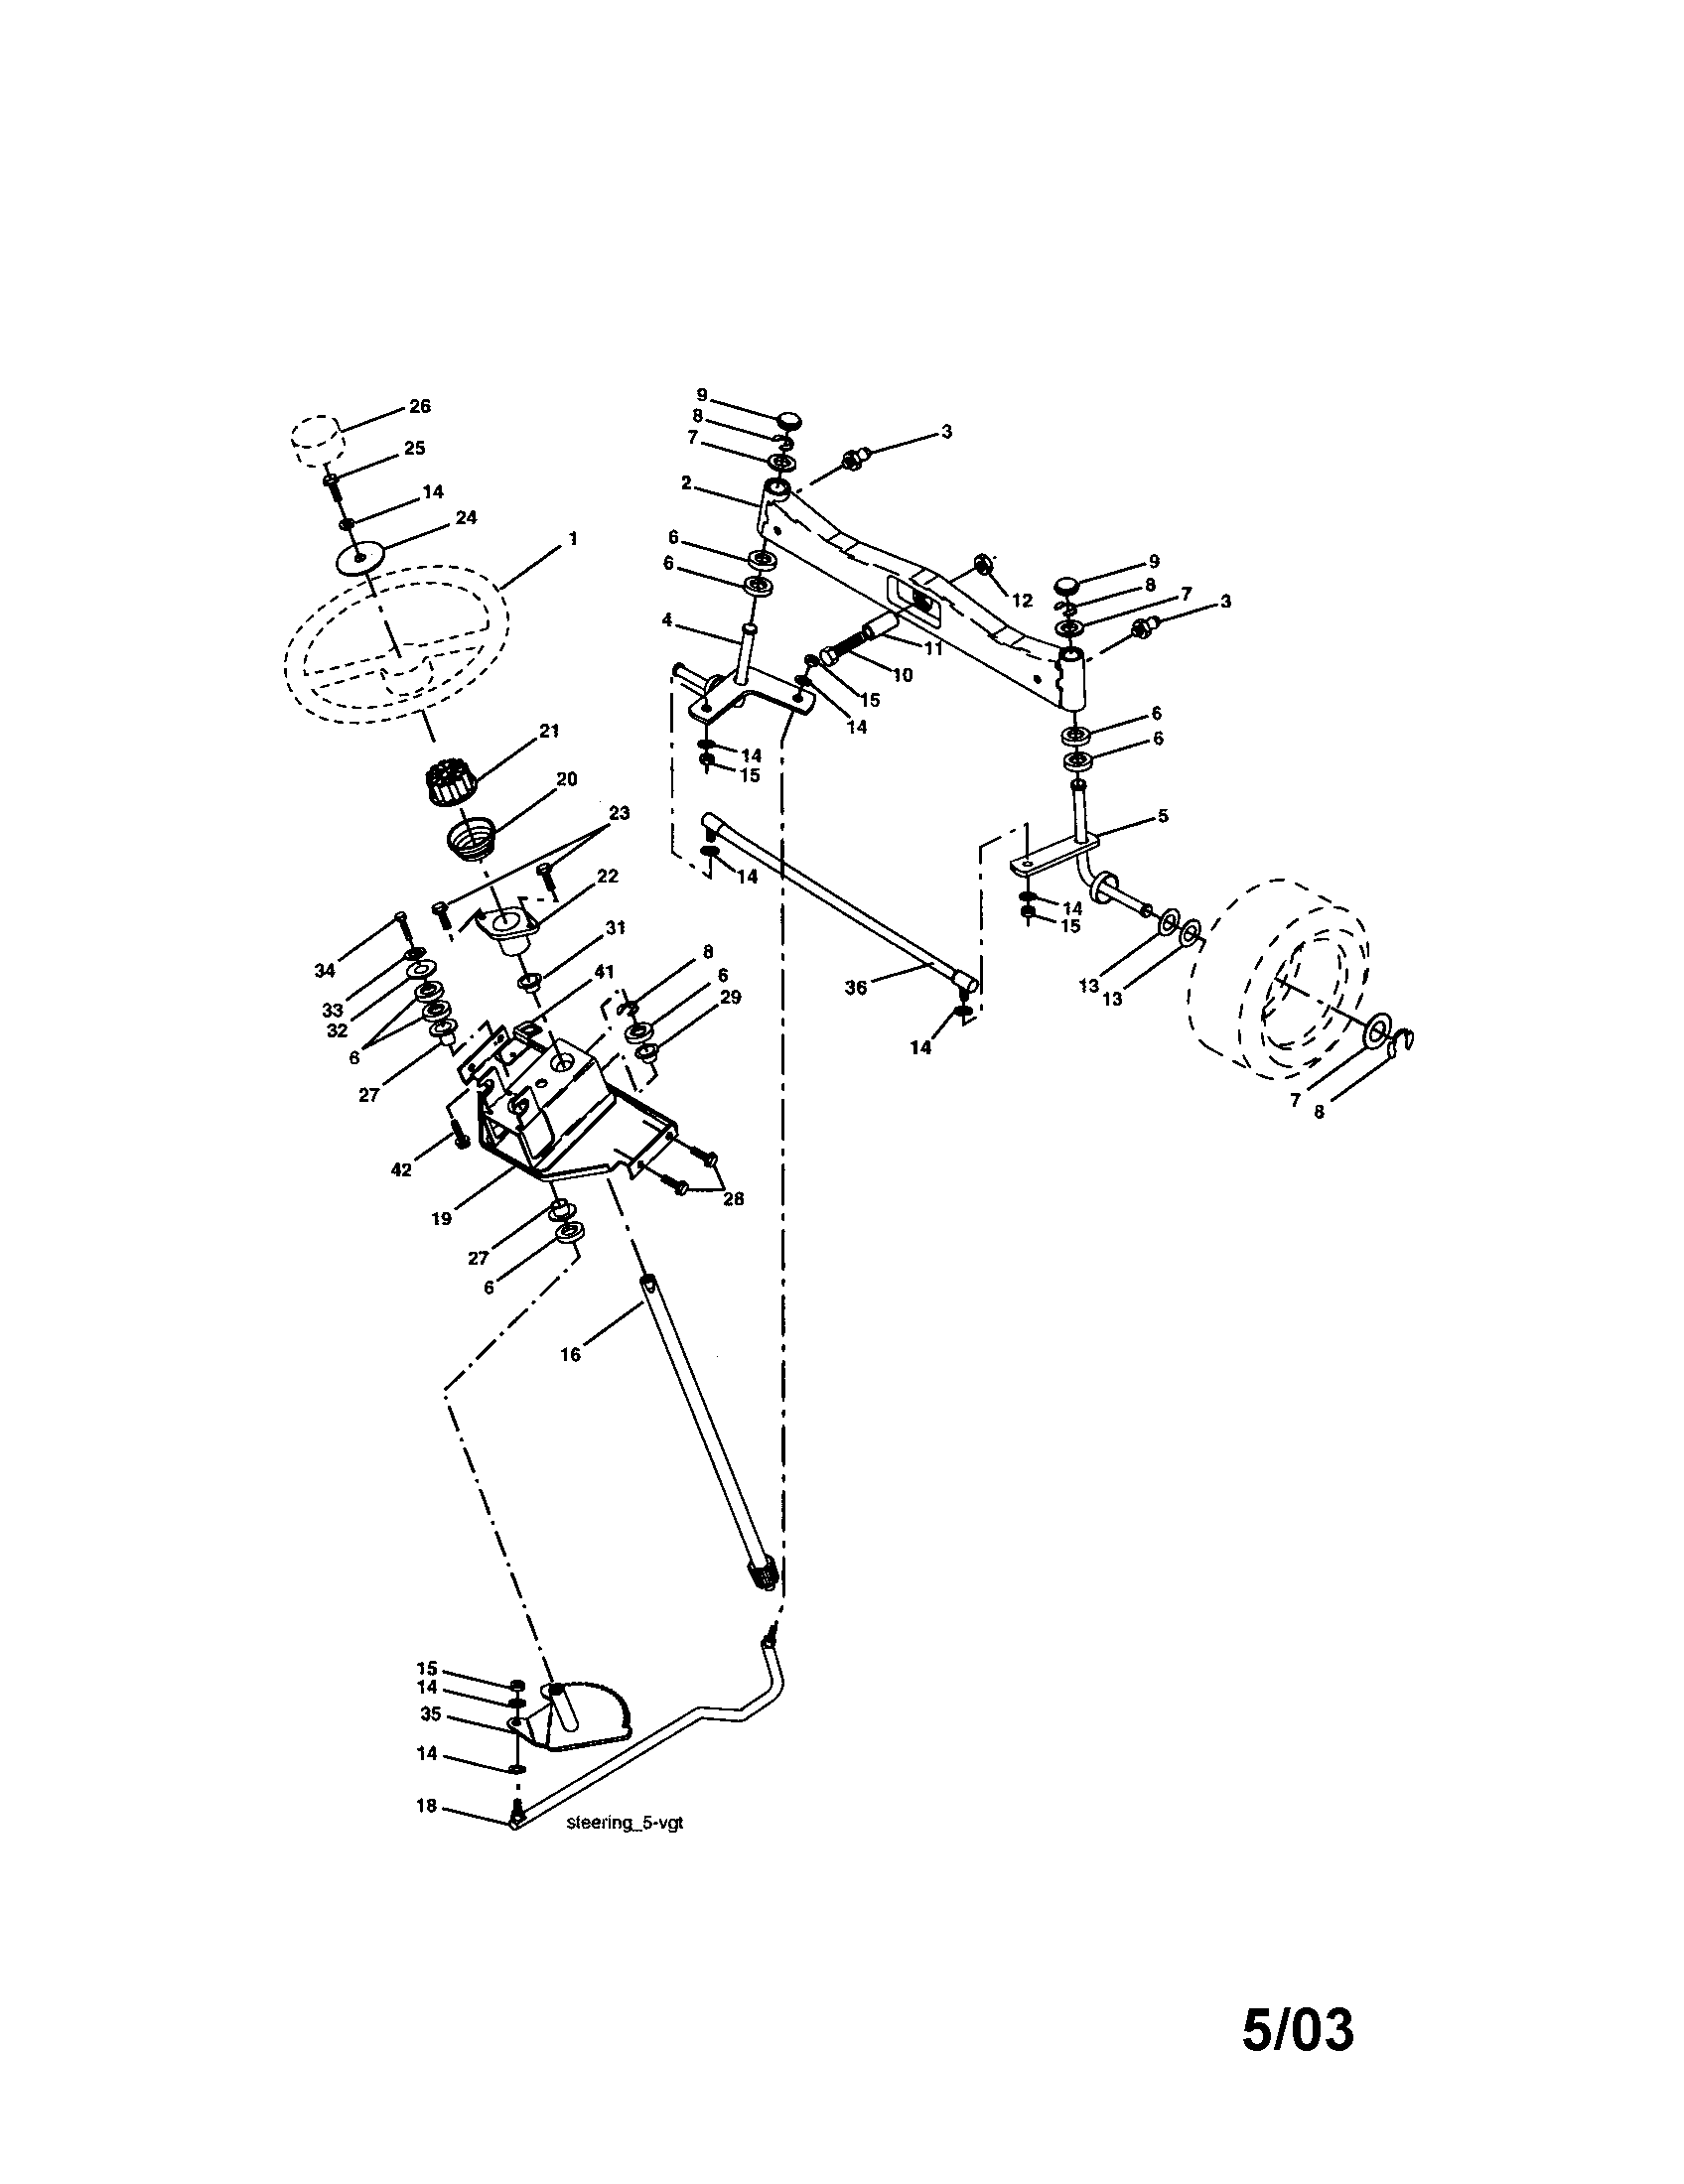 sears model #917.275970 tractor wiring diagram